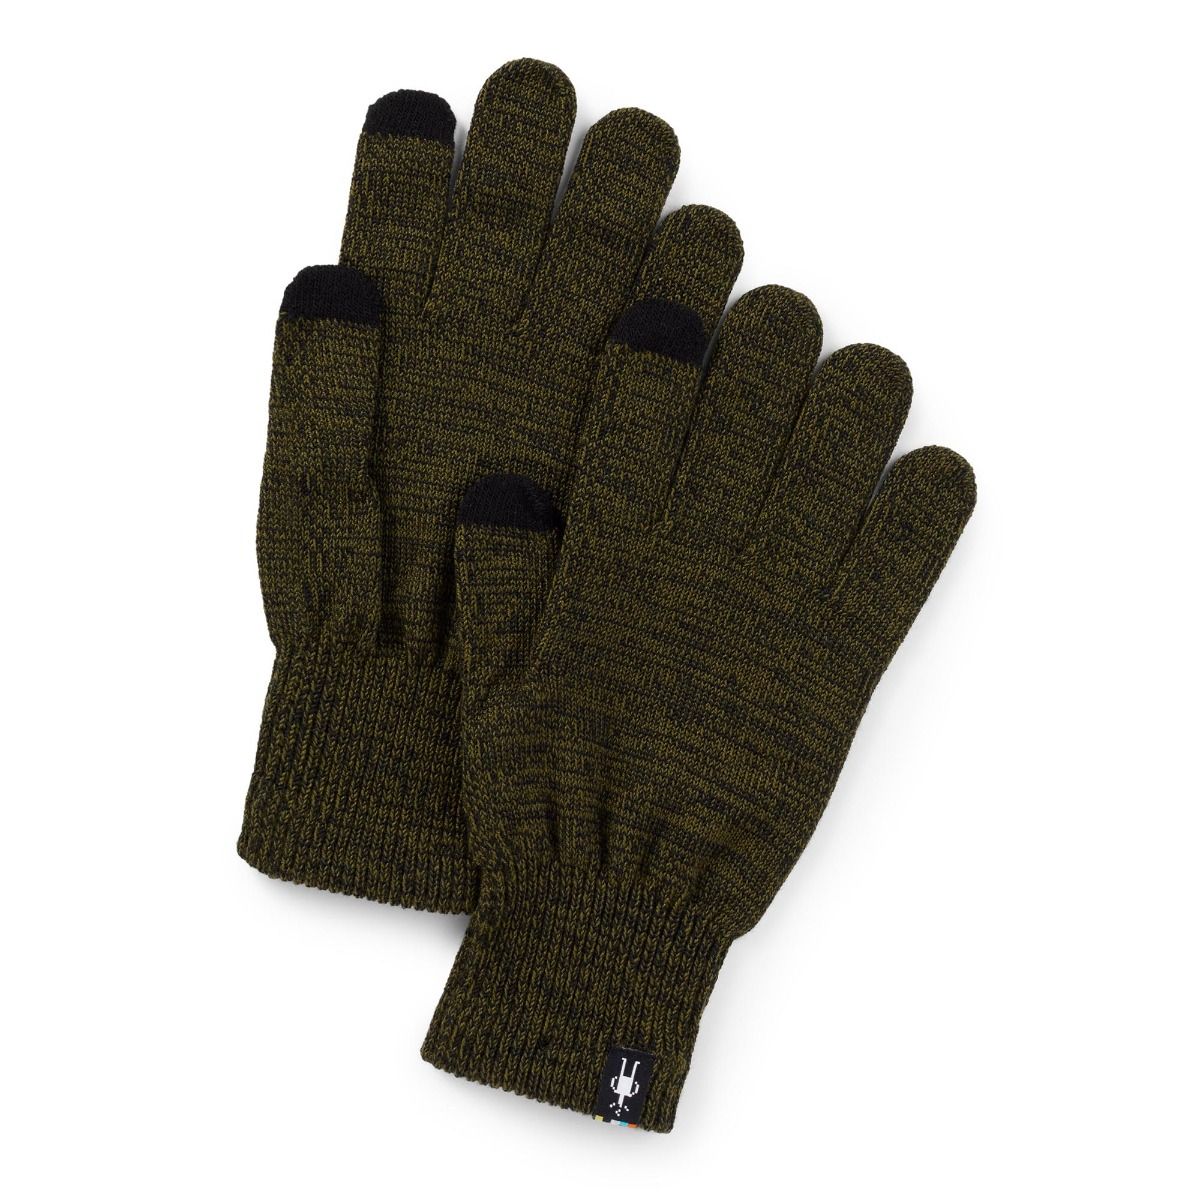 Evridwear 1 Pair Merino Wool String Knit Liner Fingerless Touchscreen Gloves, Men Women (Navy) Small/Medium